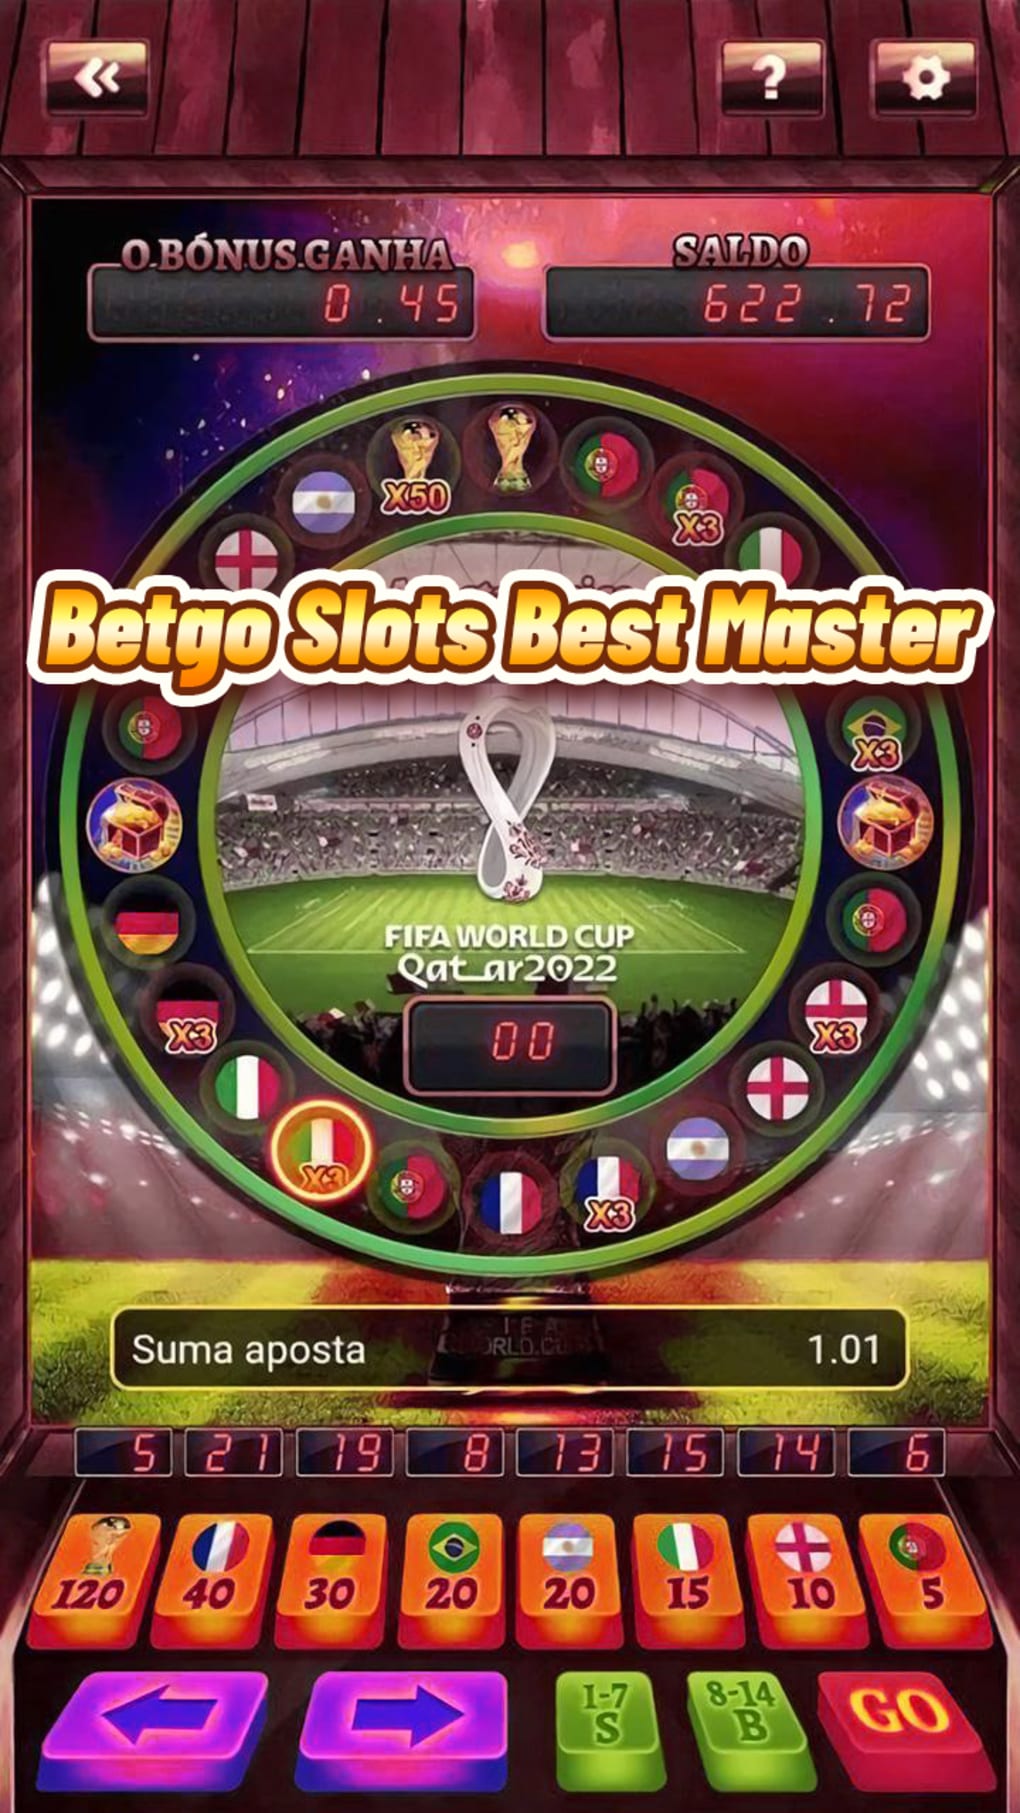 Betgo Slots Master APK (Android Game) - Free Download